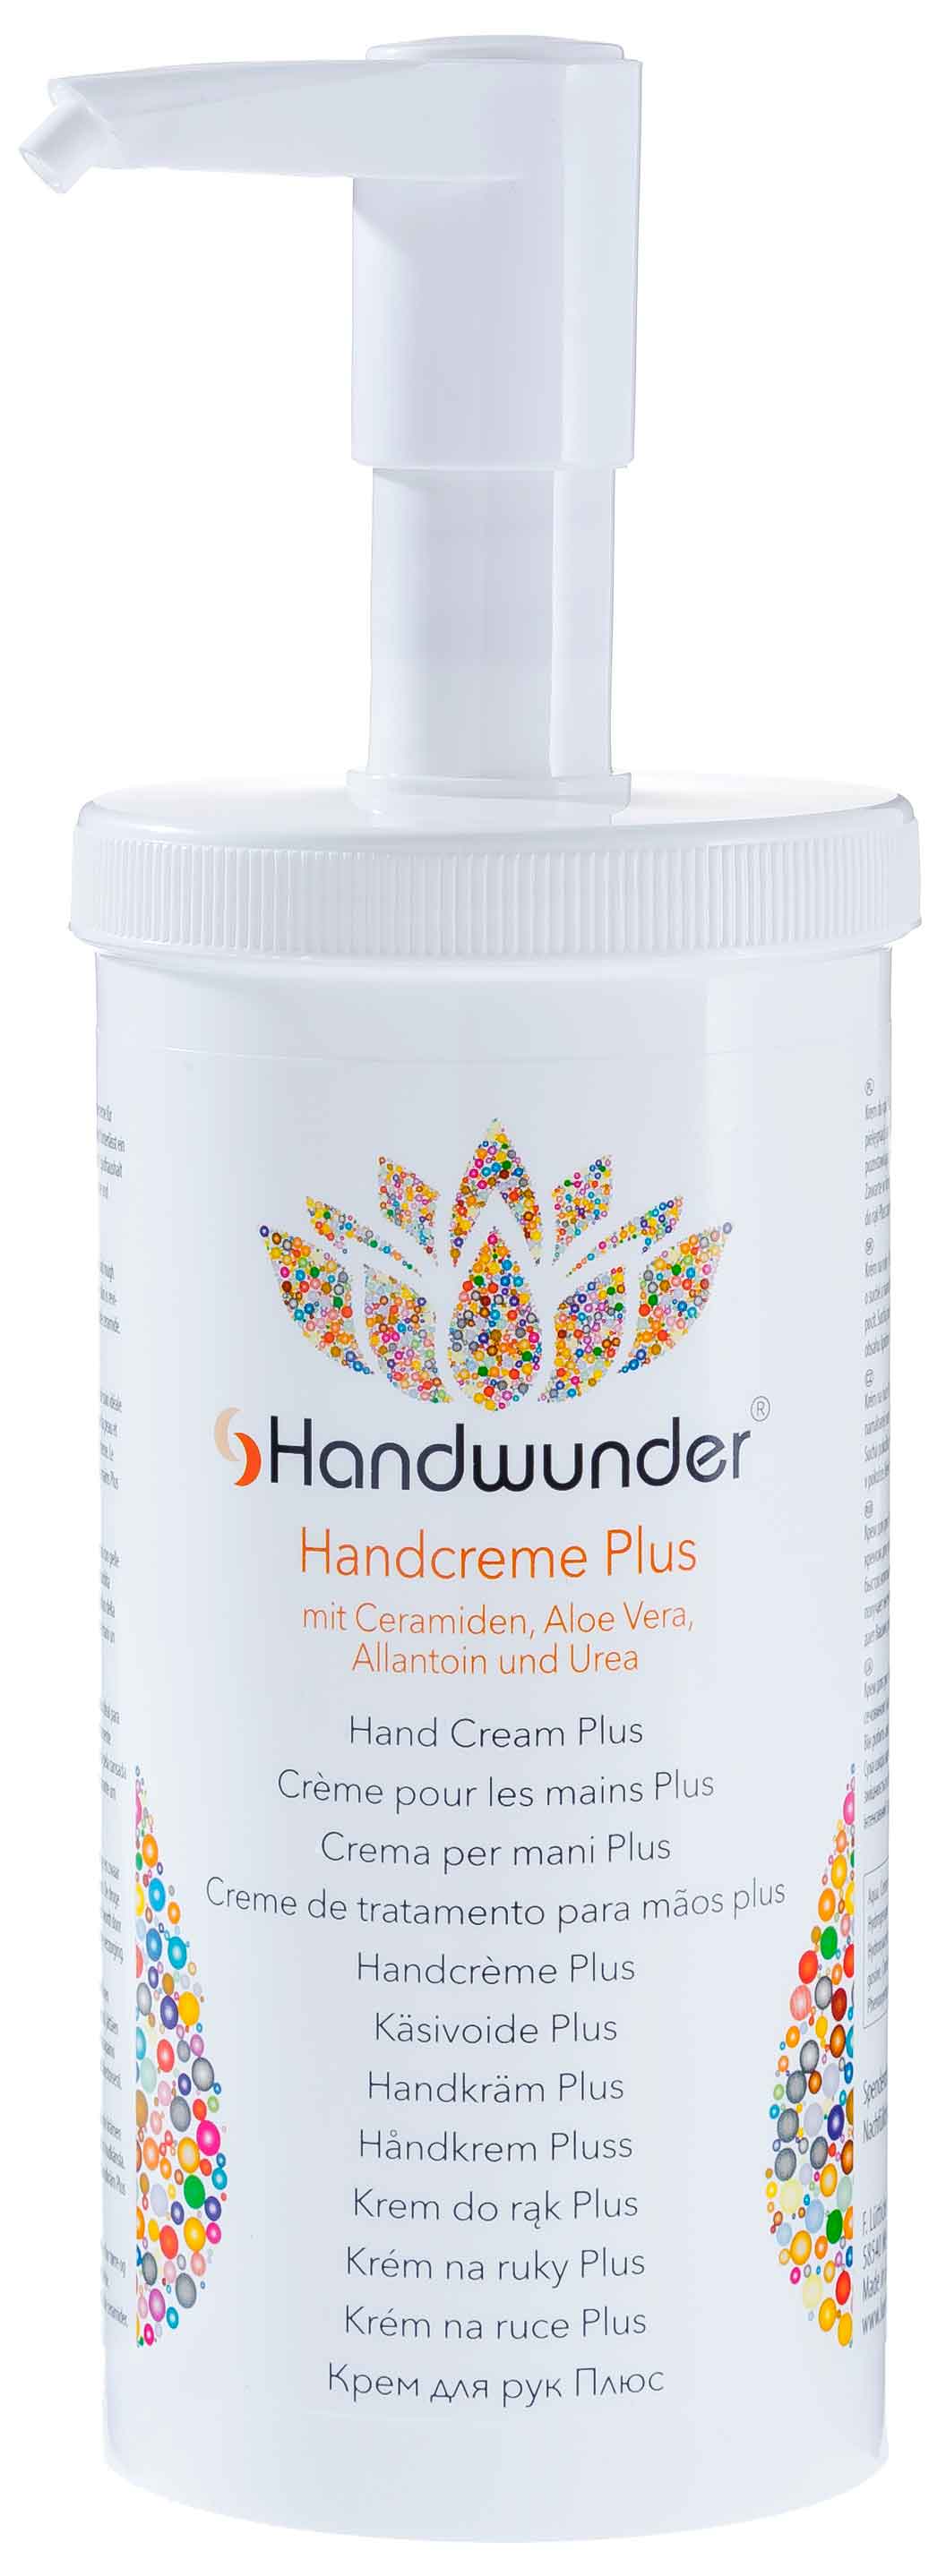 Handwunder Handcreme Plus 450 ml Spenderdose